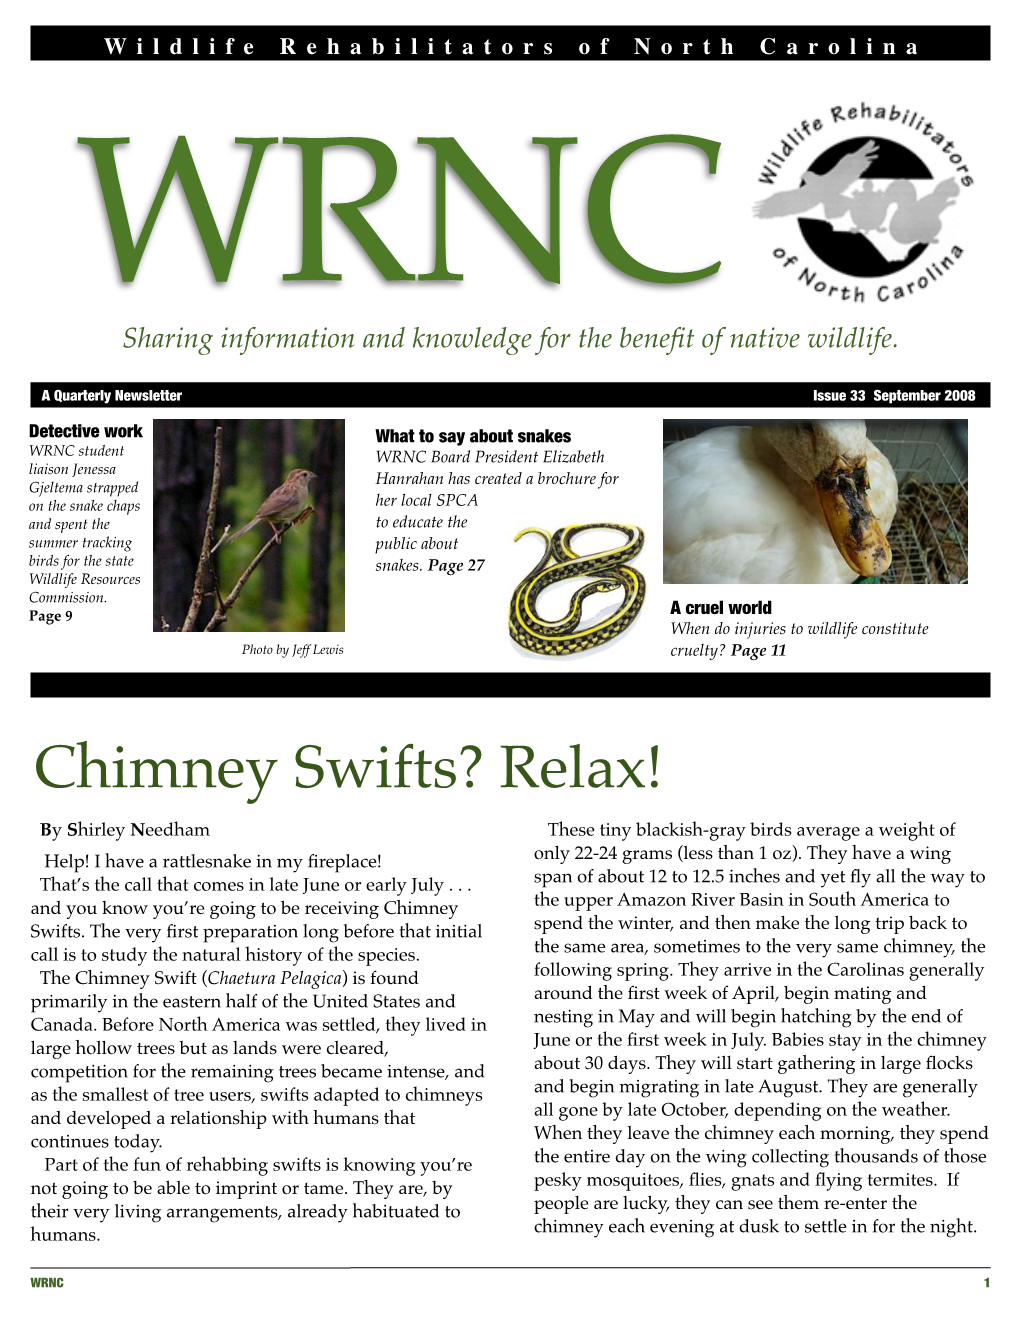 Chimney Swifts? Relax!